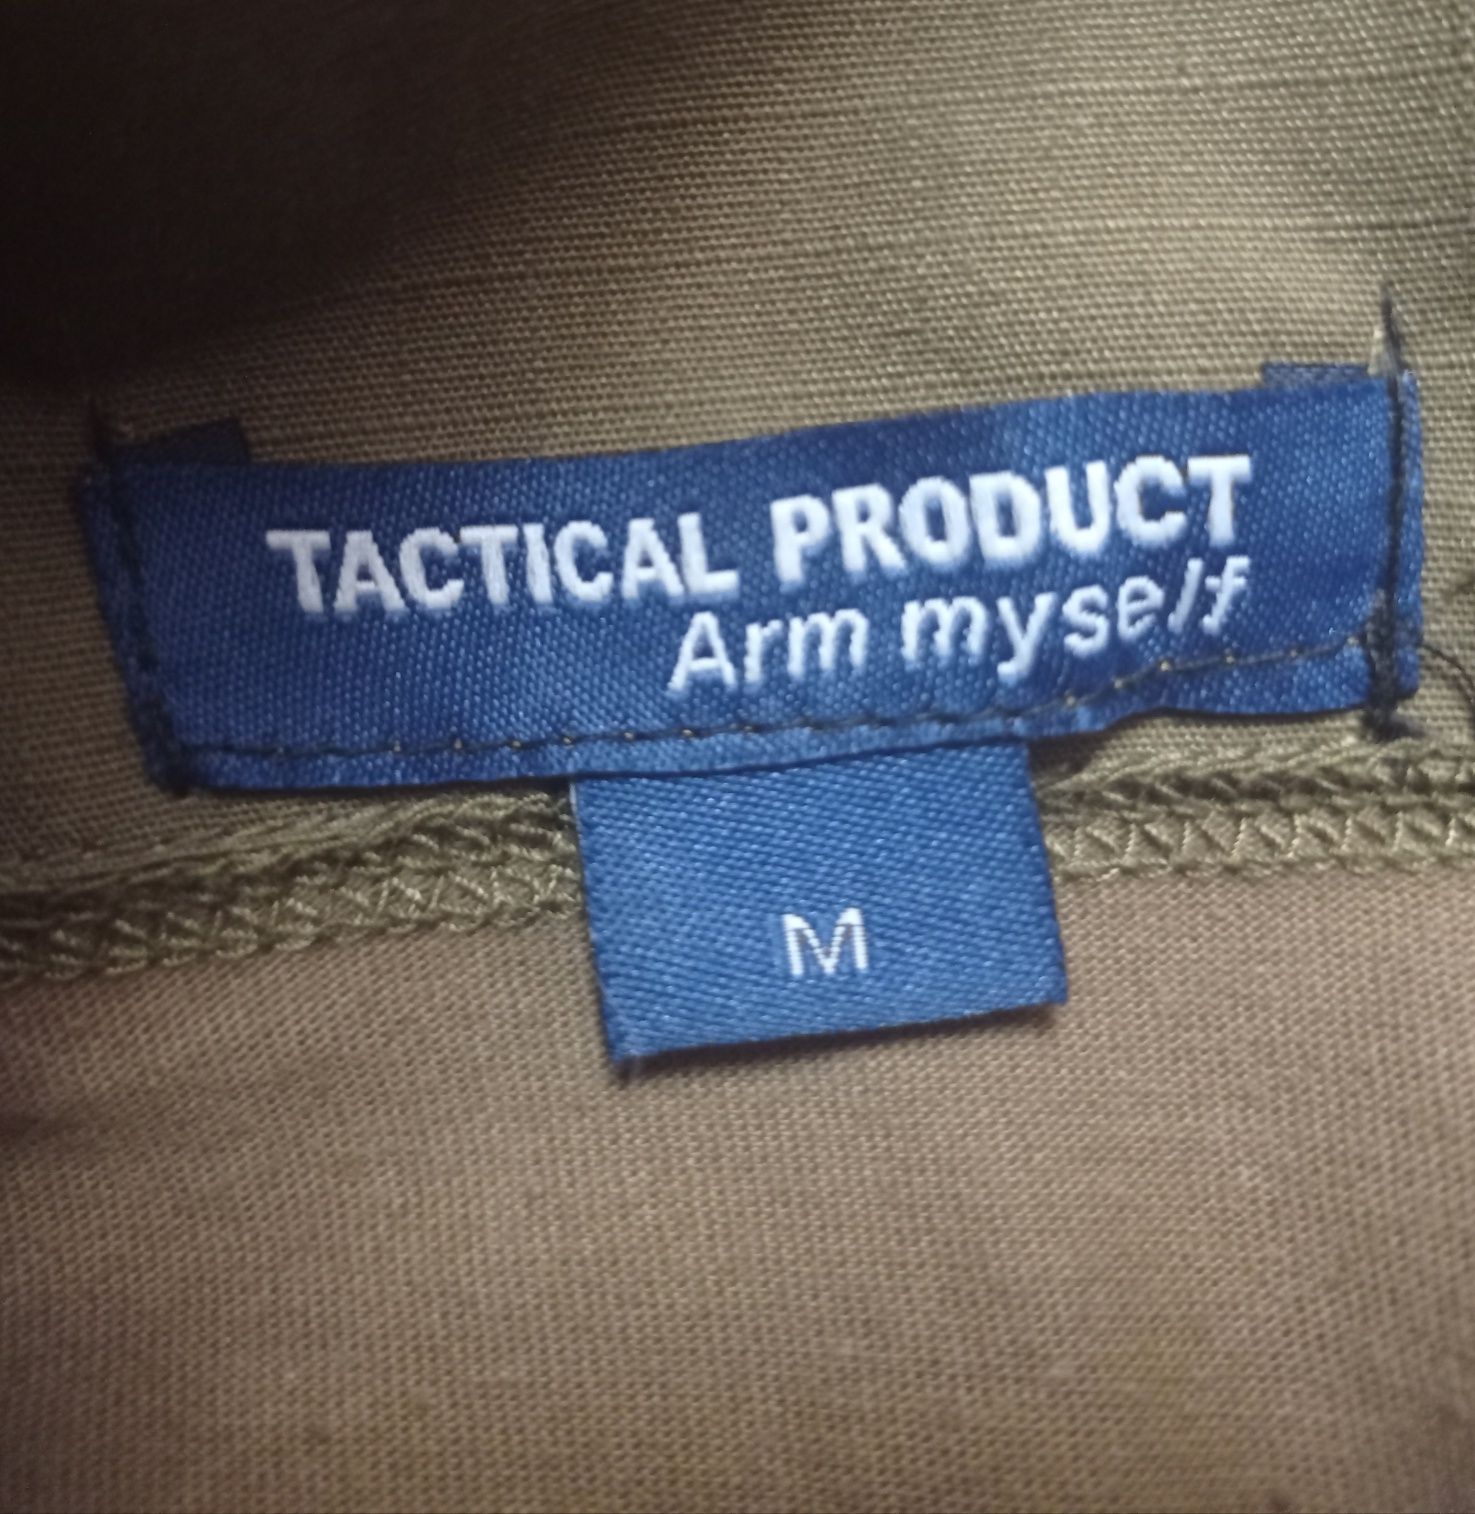 (р. S-М) Убакс Олива Tactical product Arm myself